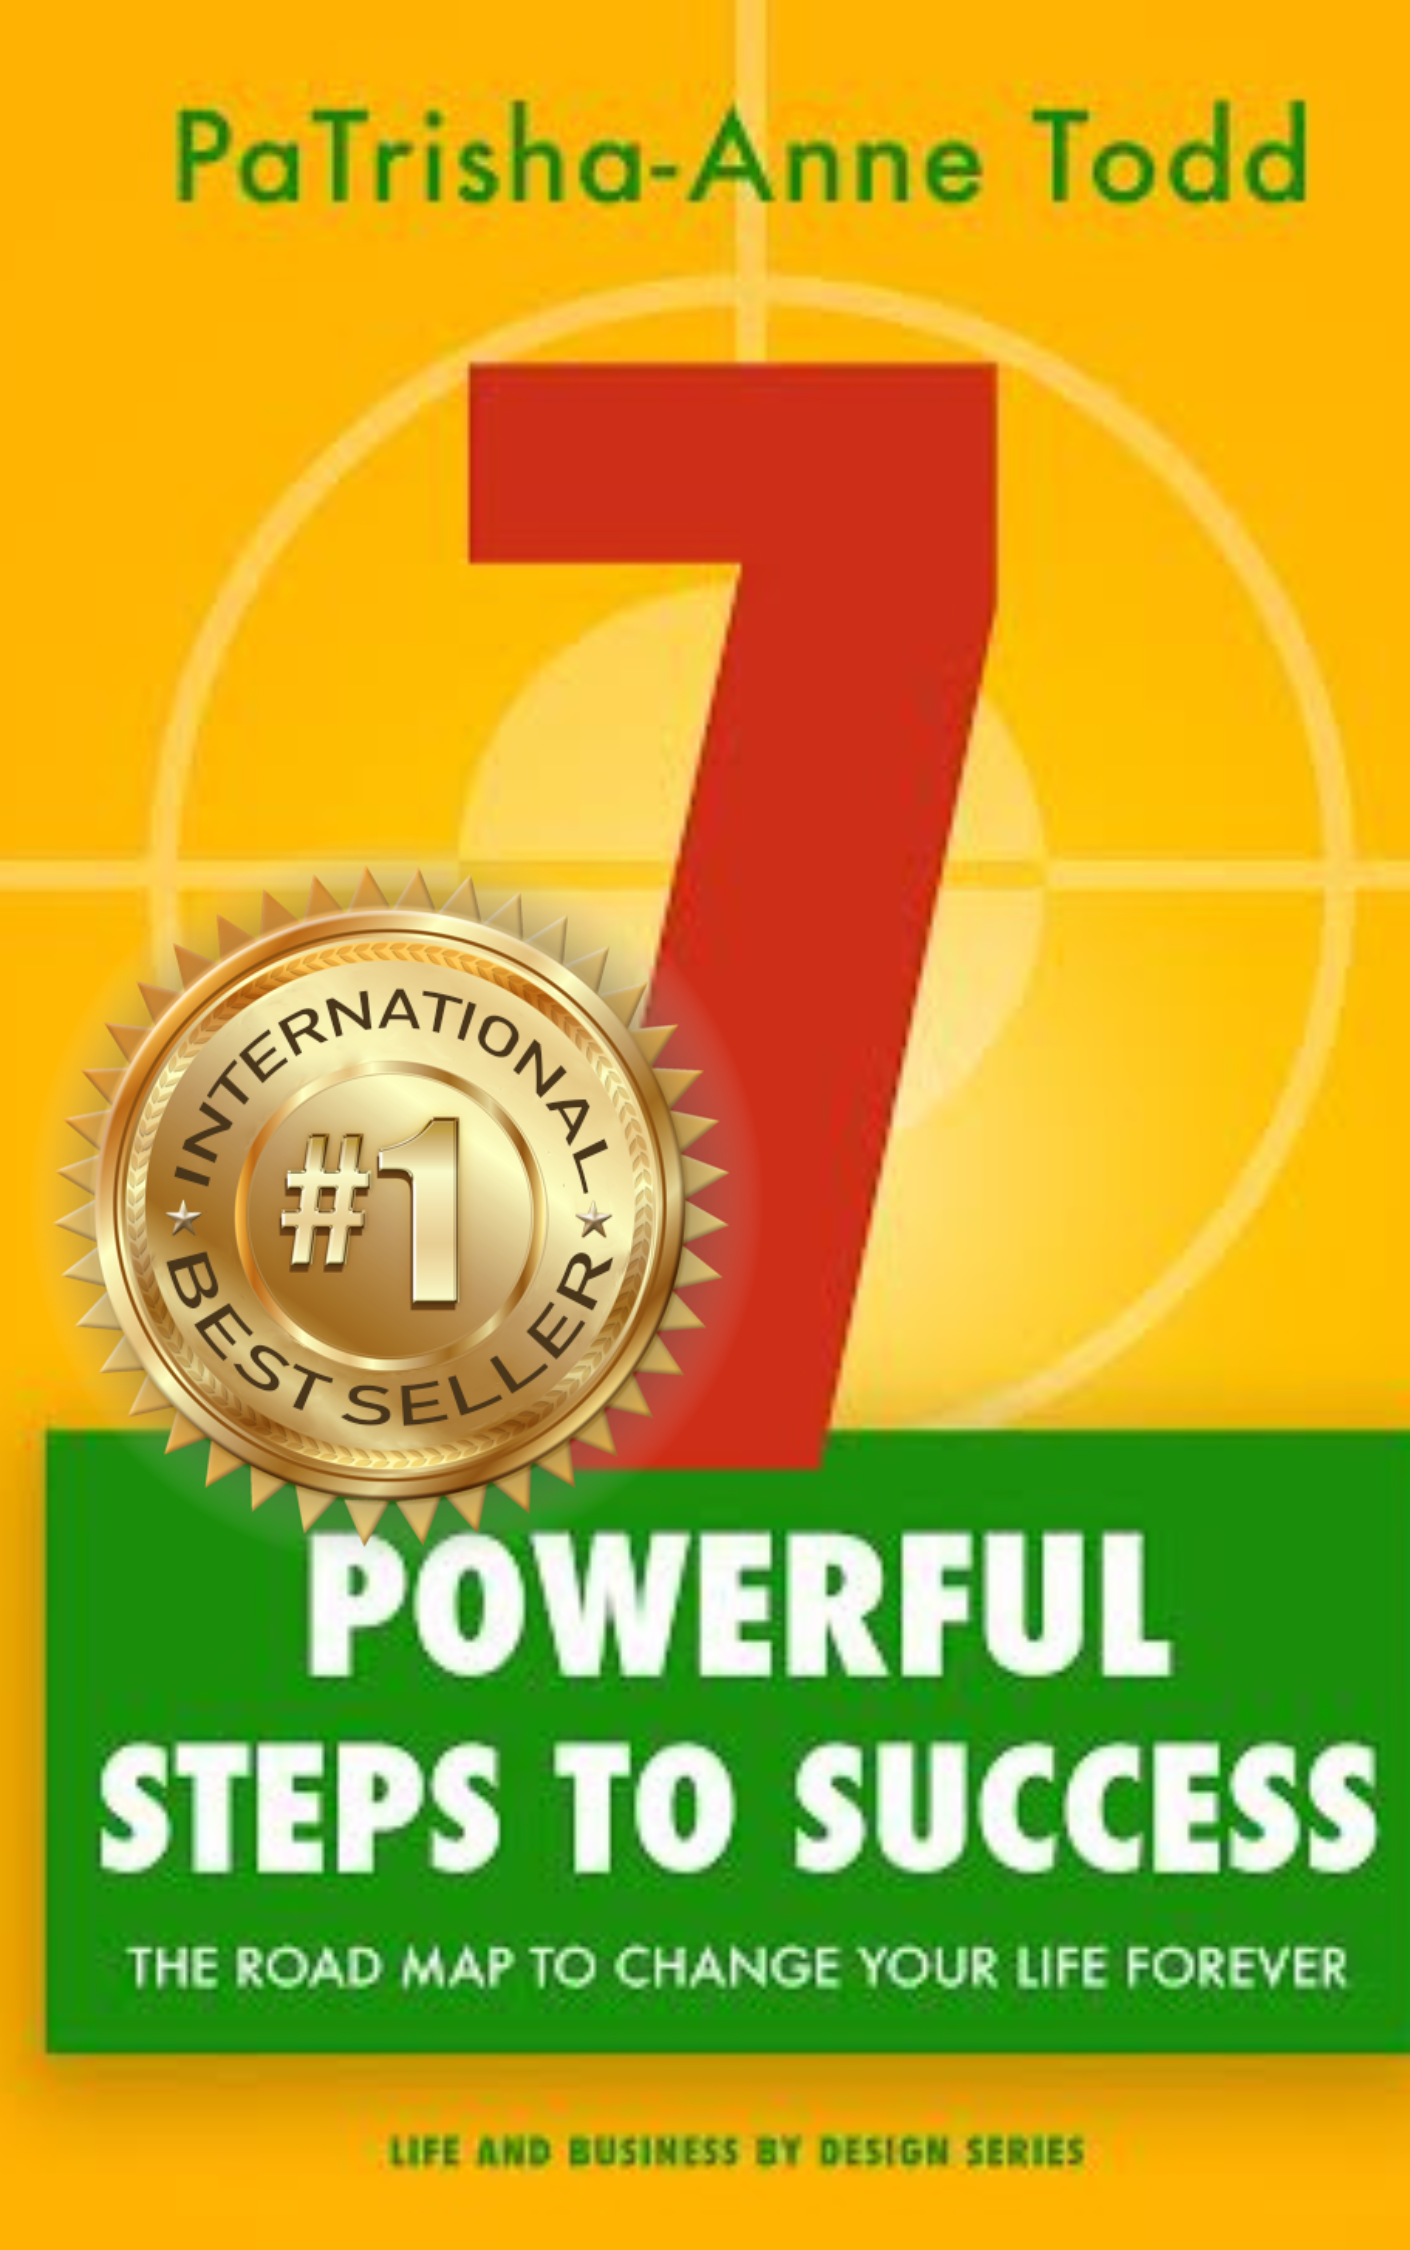 International Amazon Best Seller PaTrisha-Anne Todd book '7 Powerful Steps To Success'